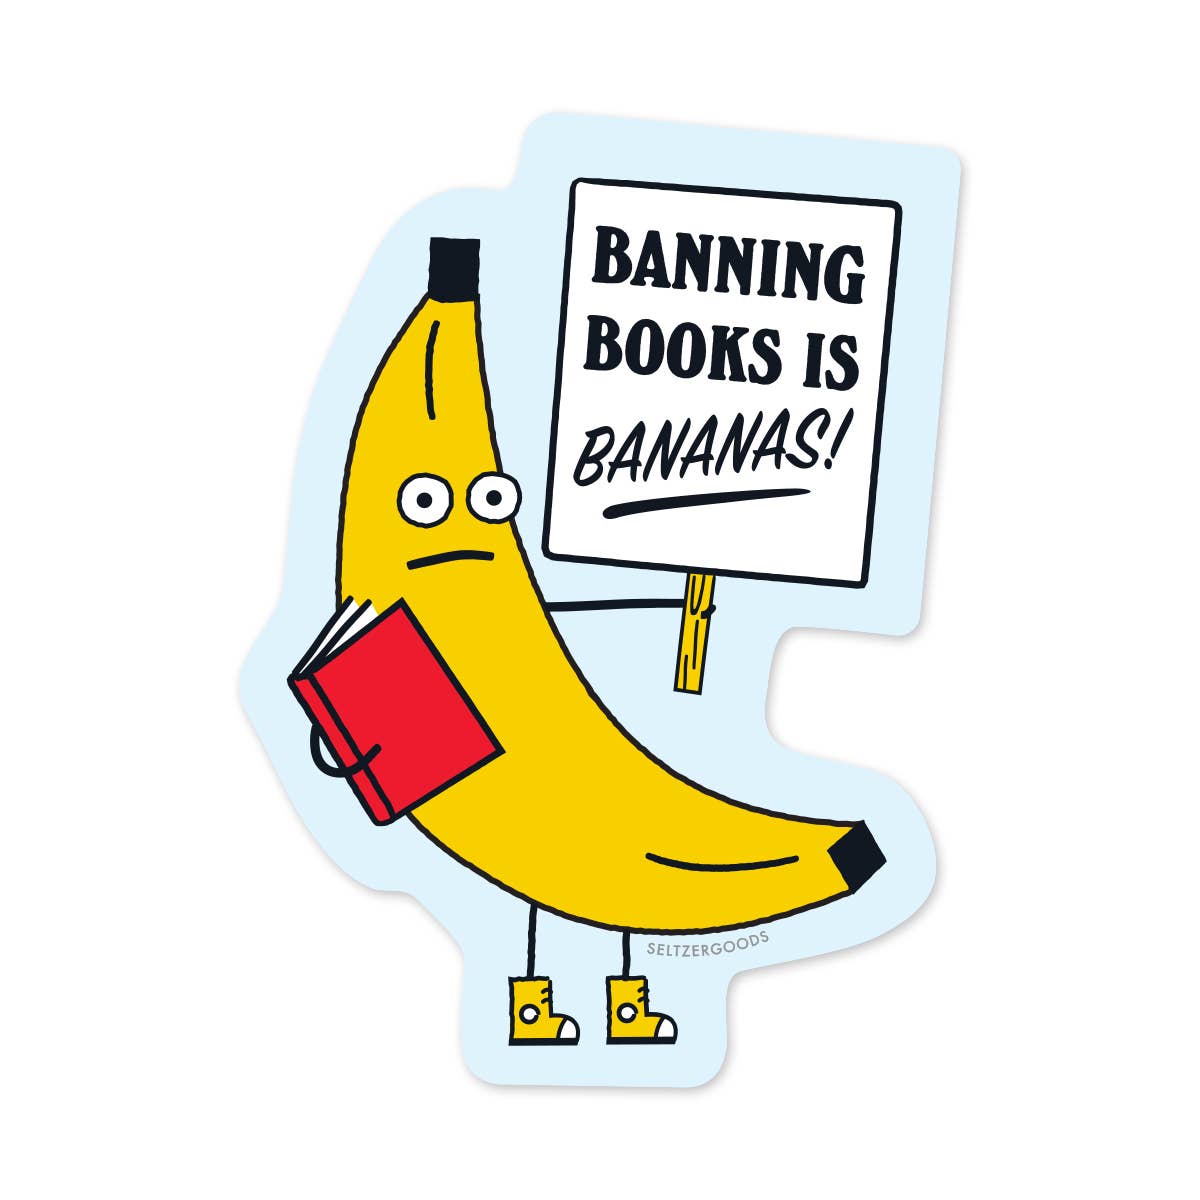 Sticker-BannedBooks-01: Banning Books is Bananas!